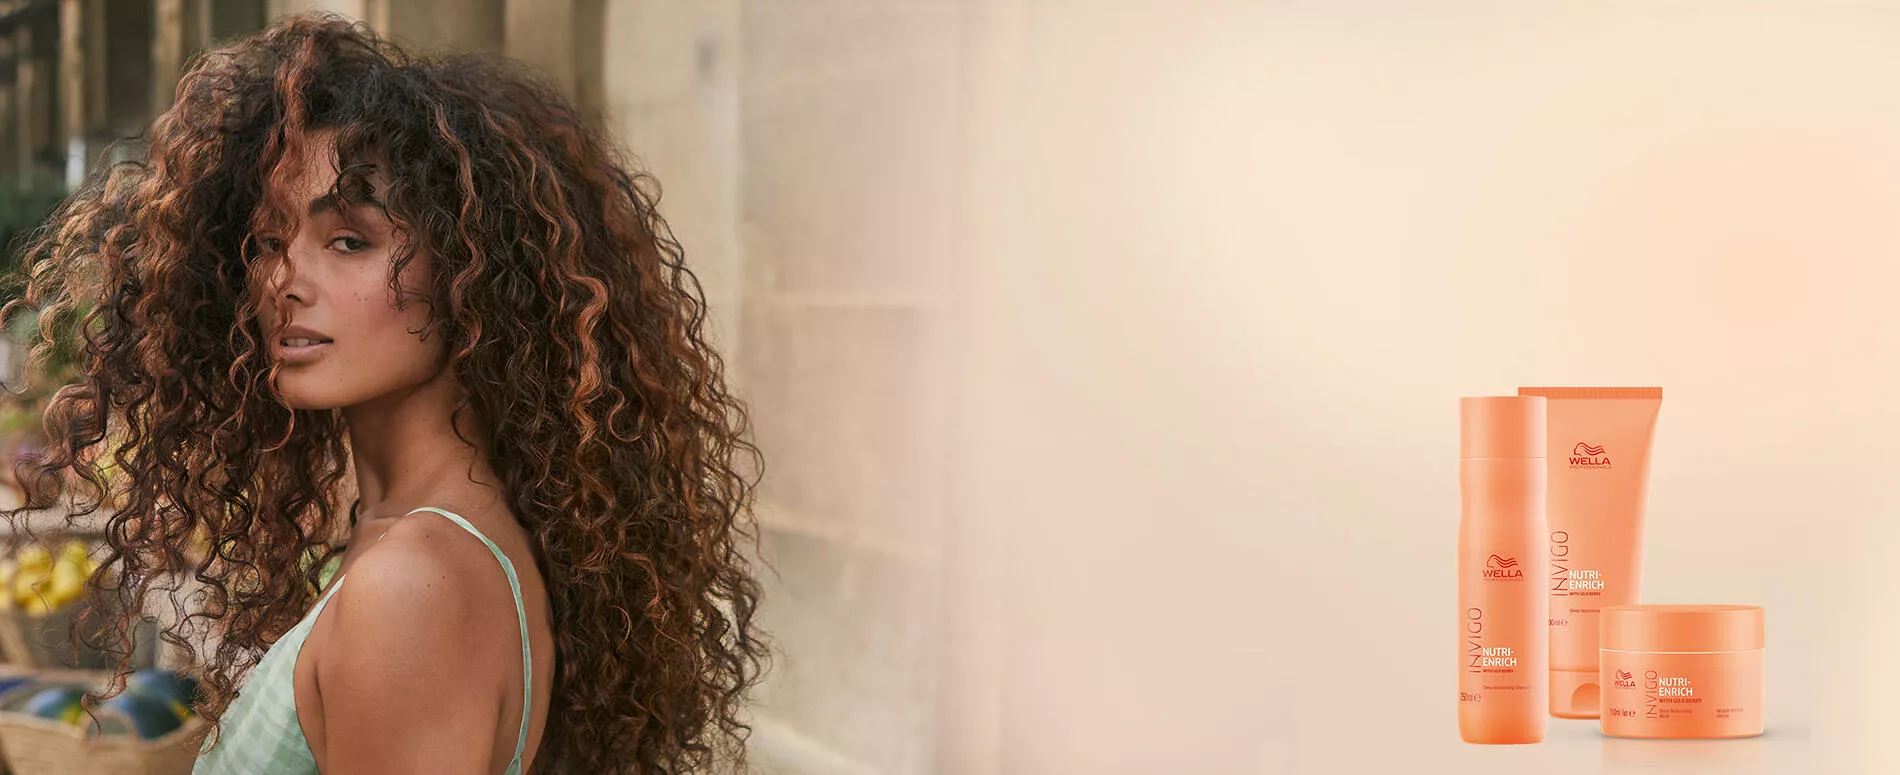 Curly hair model + Invigo Nutri-Enrich products